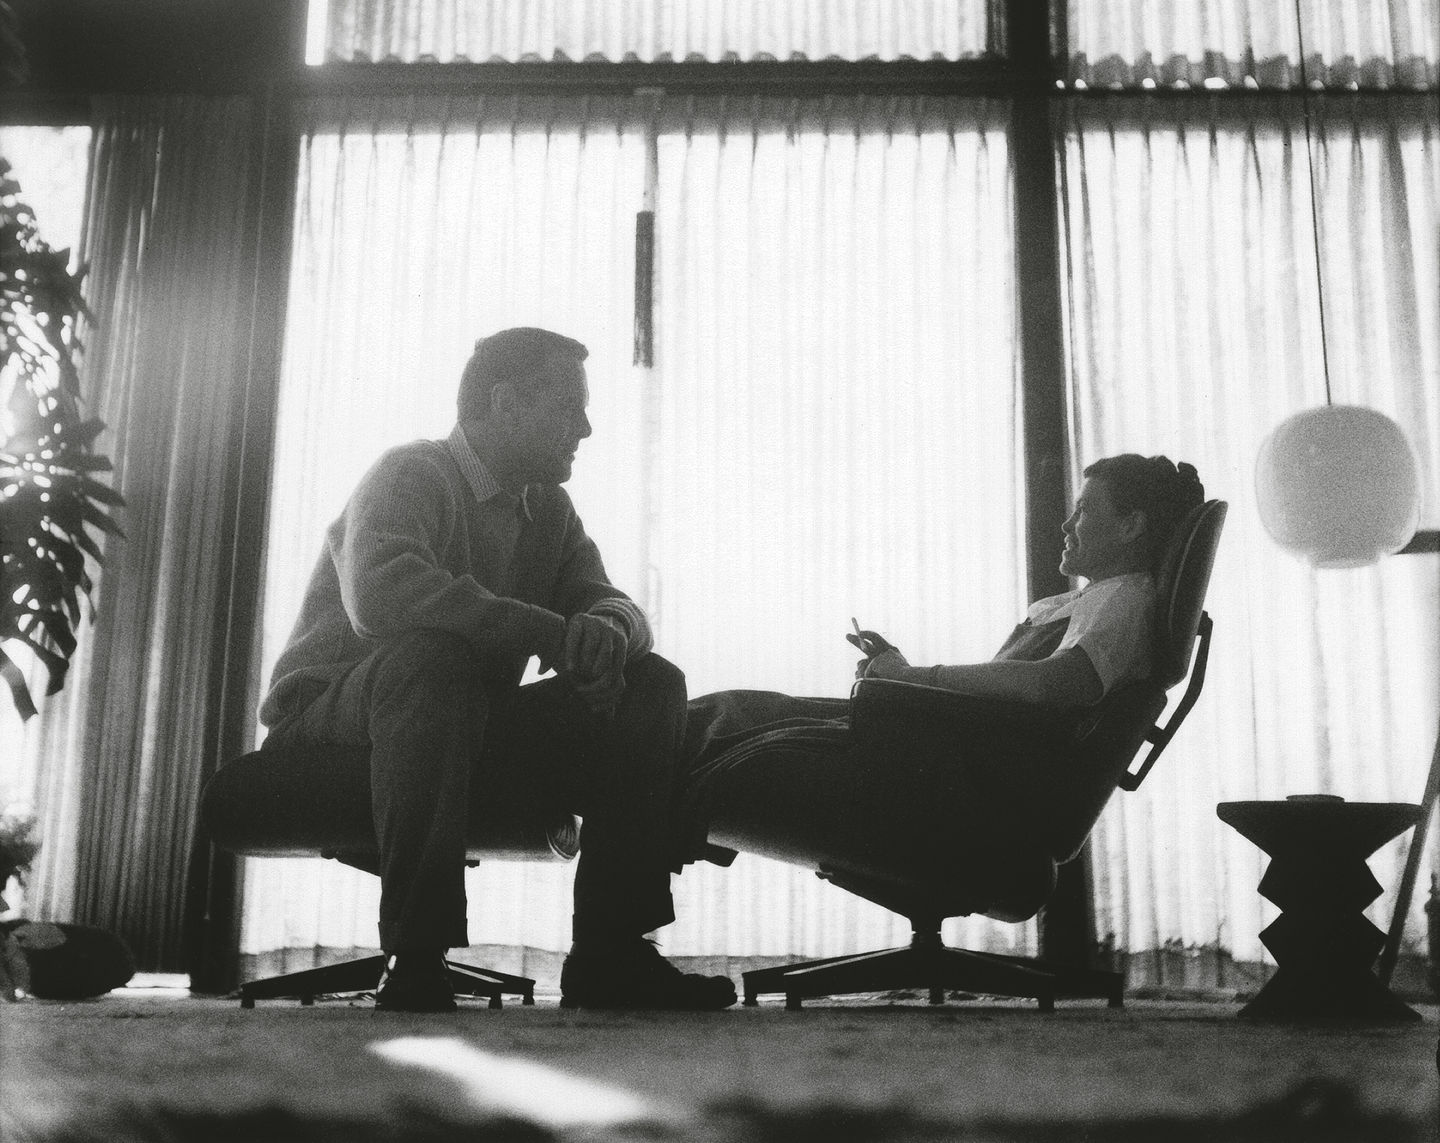 Vitra, Lounge Chair, Charles & Ray Eames 1956